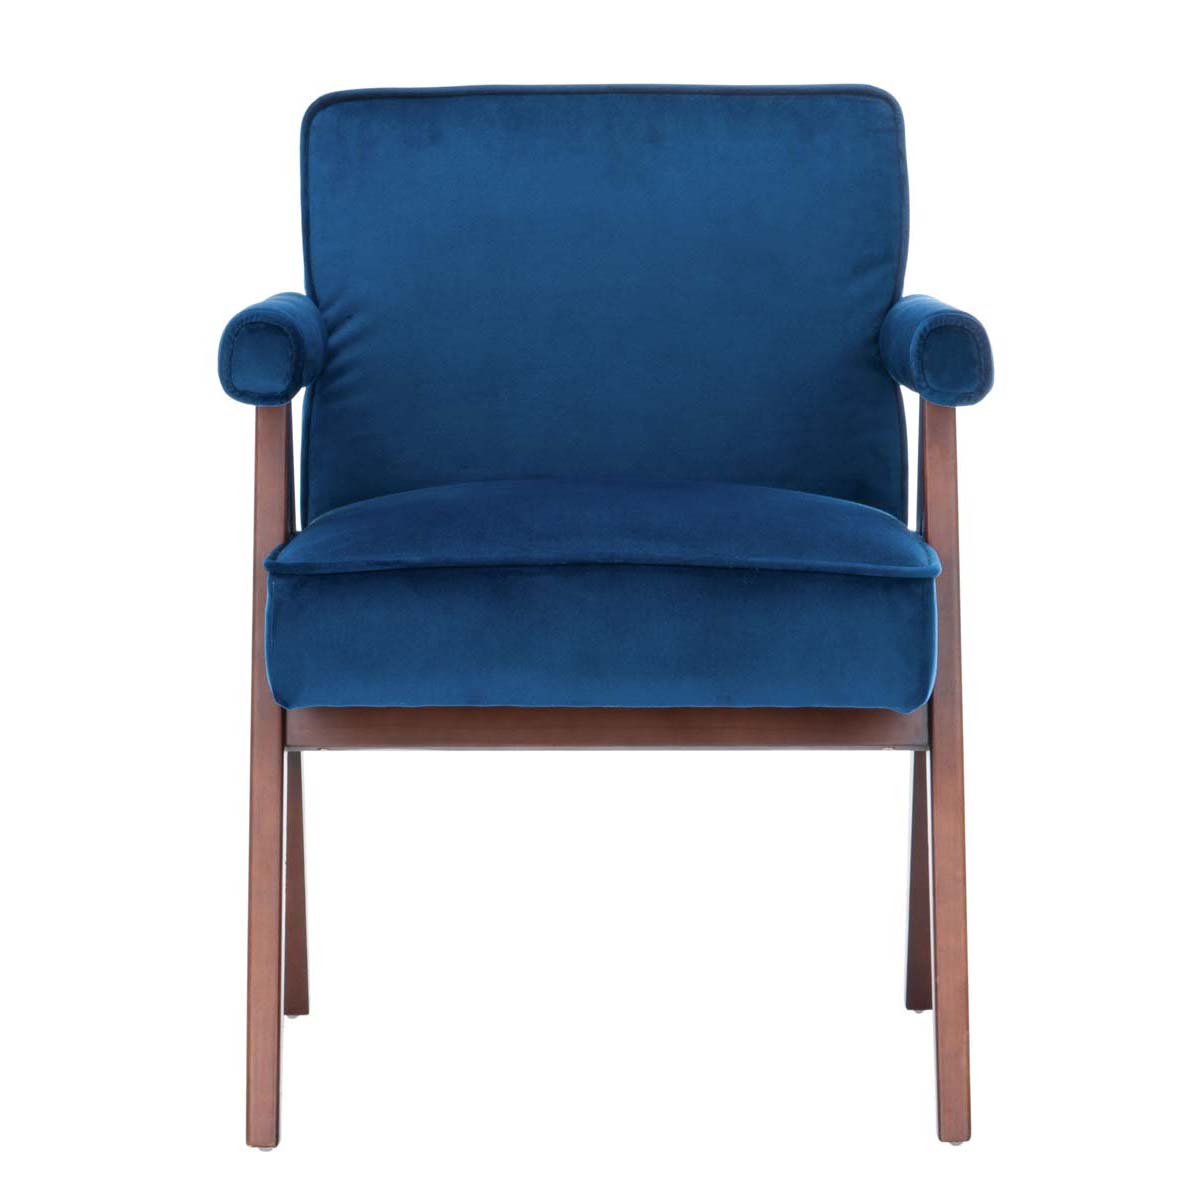 Safavieh Suri Mid Century Arm Chair , ACH4508 - Navy Velvet/Walnut